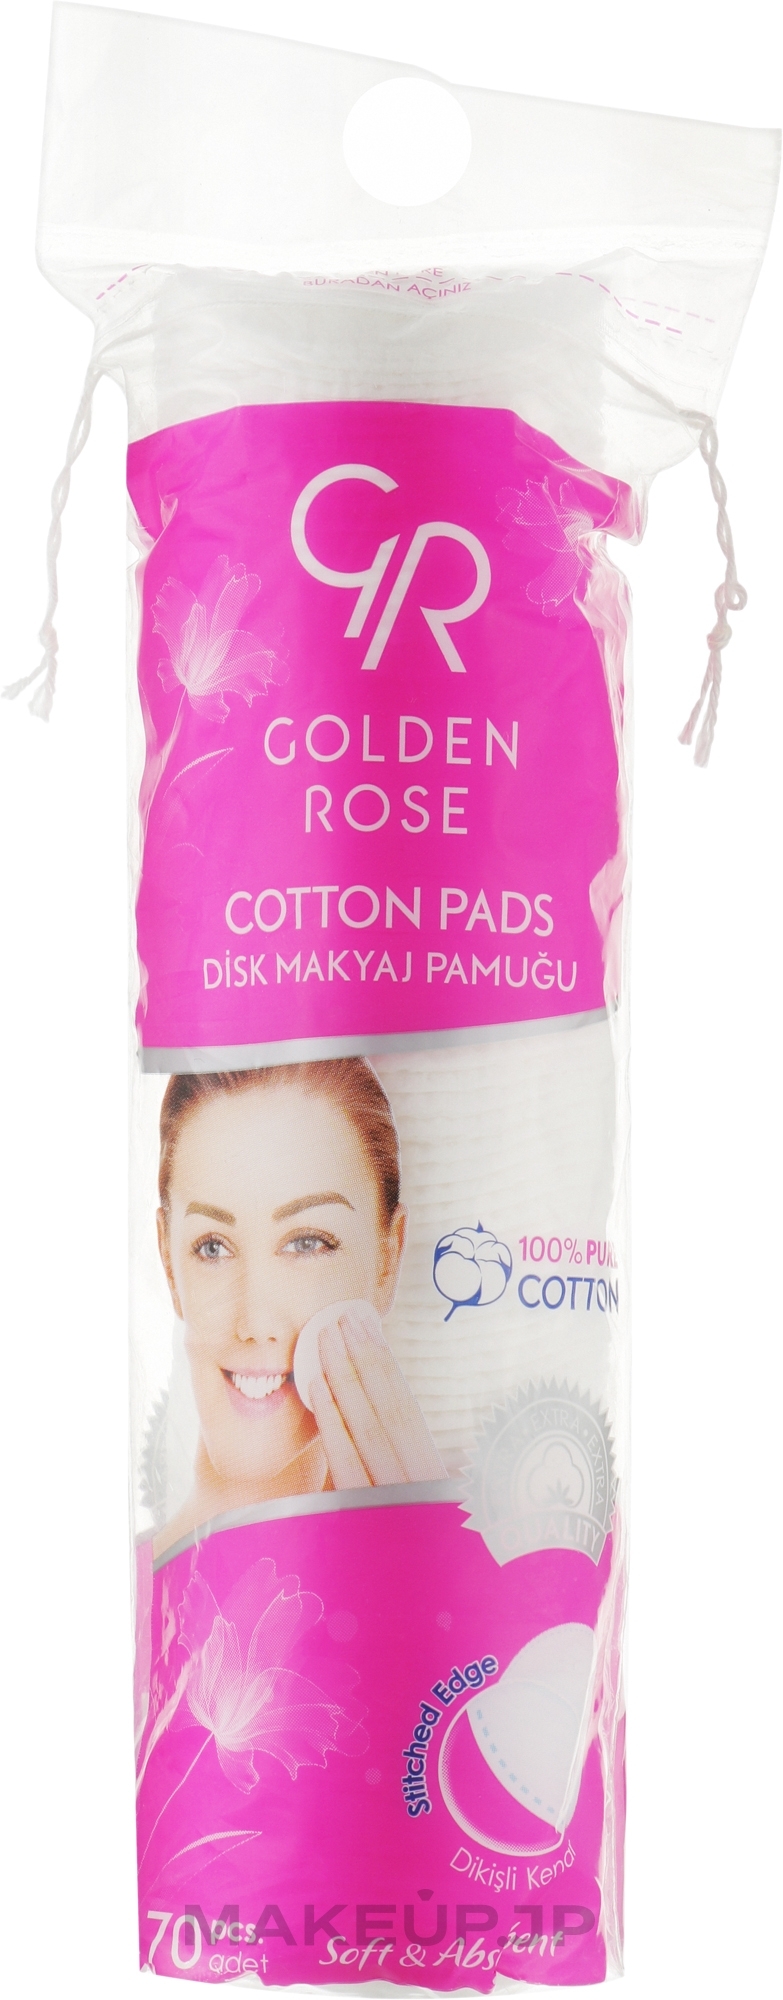 Cotton Pads - Golden Rose Cotton Pads for Makeup Removal — photo 70 szt.